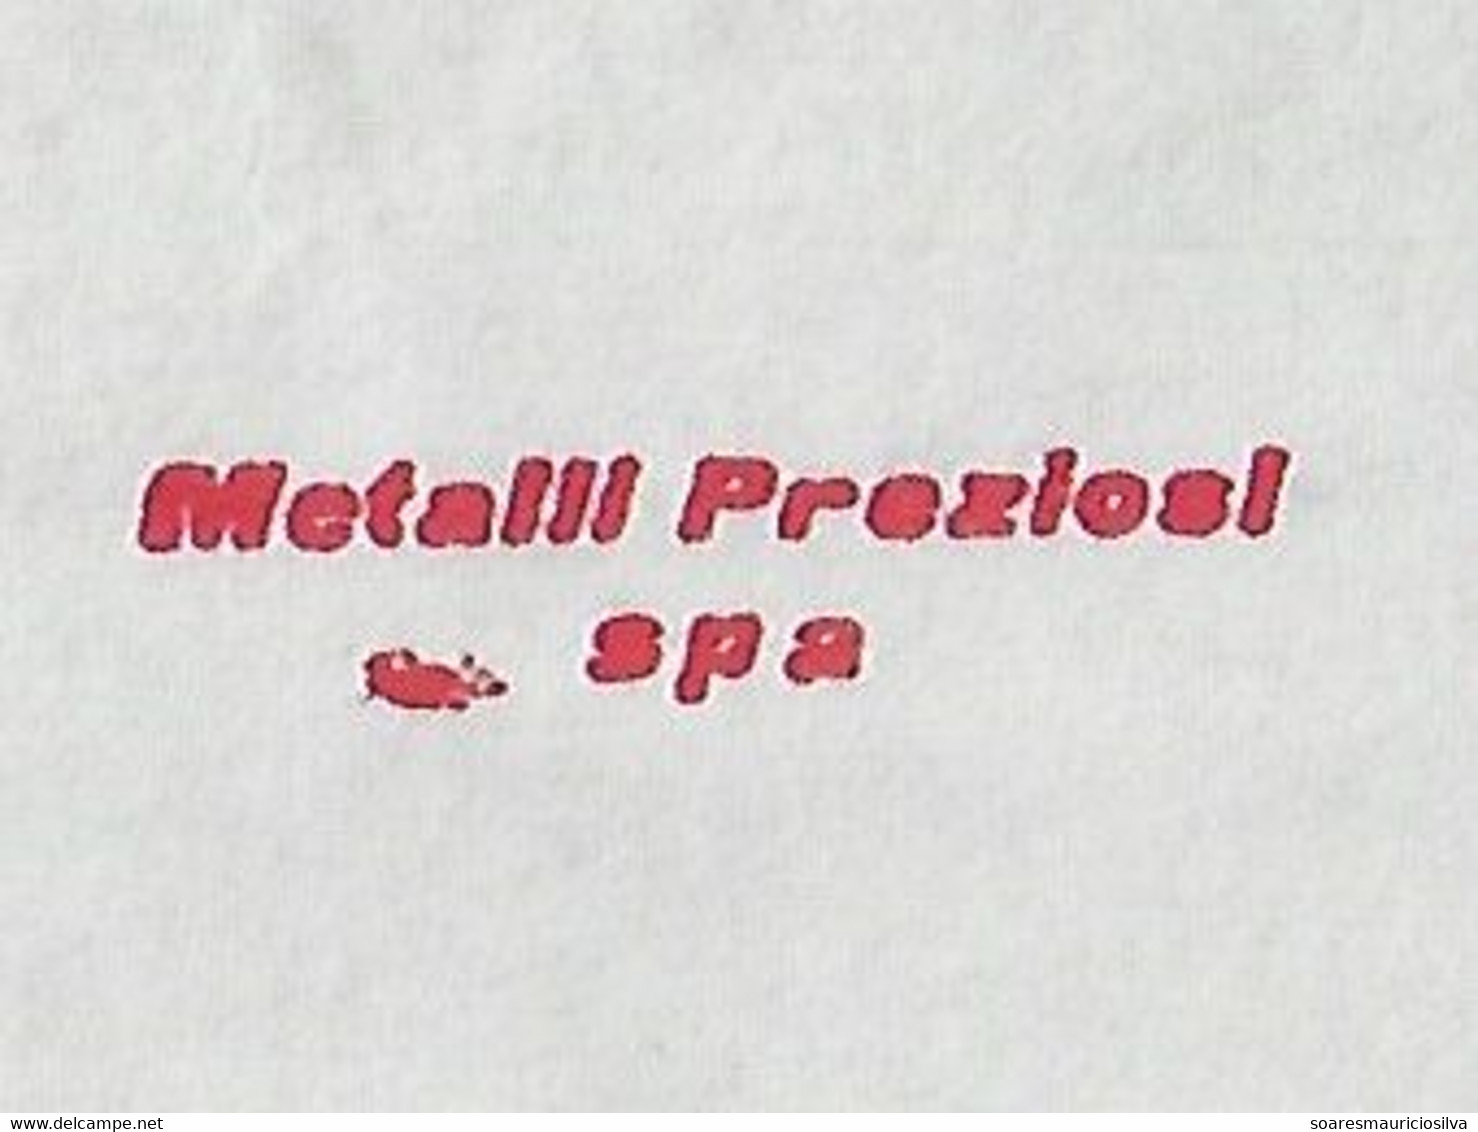 Italy 1989 Cover Paderno Dugnano To Mese Meter Stamp Neopost Model EFM7 Slogan Precious Metal Electronic Sorting Mark - Minéraux